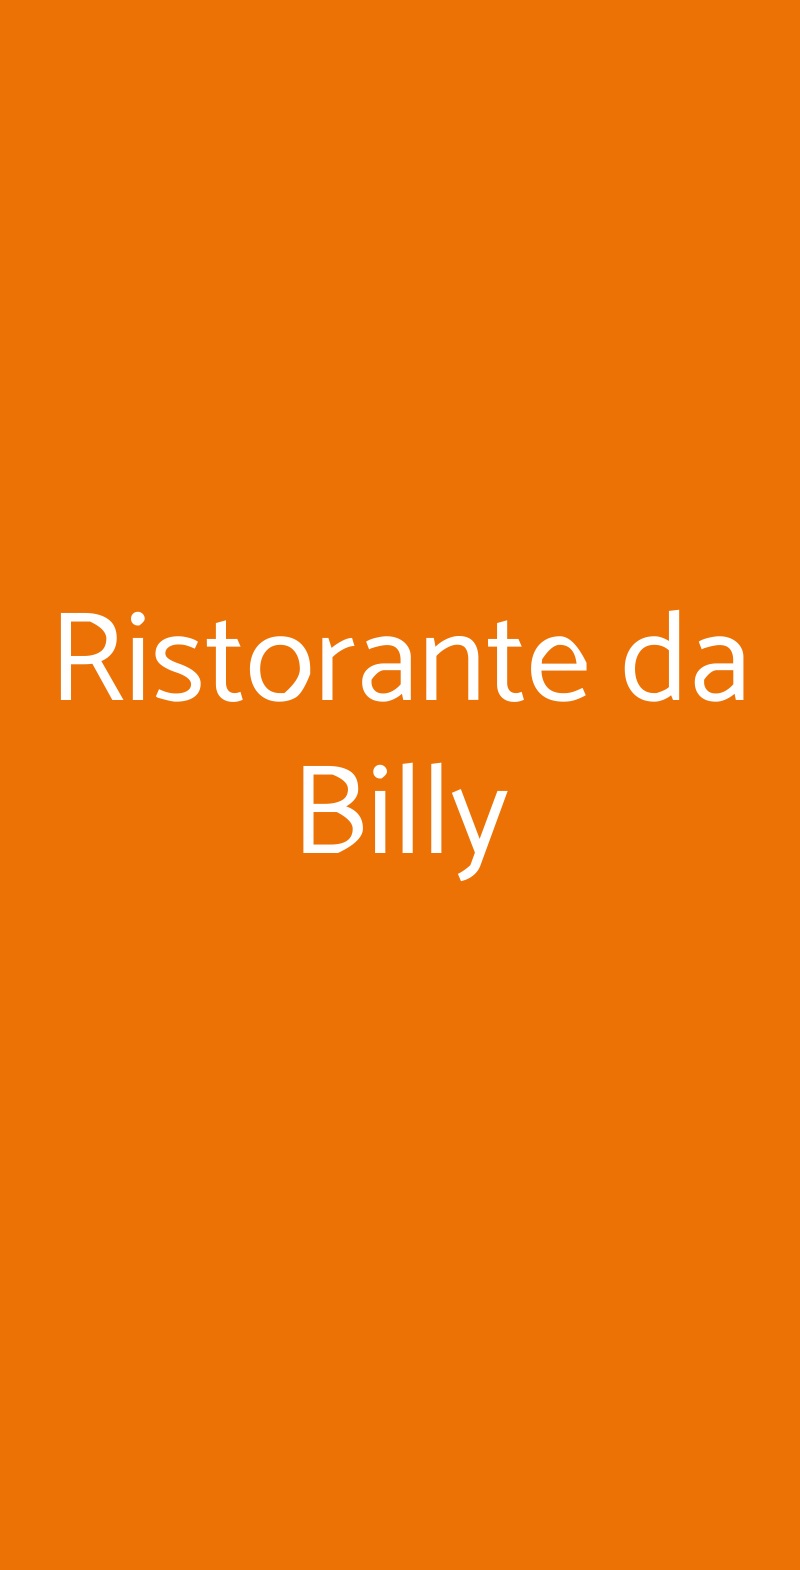 Ristorante da Billy Roma menù 1 pagina